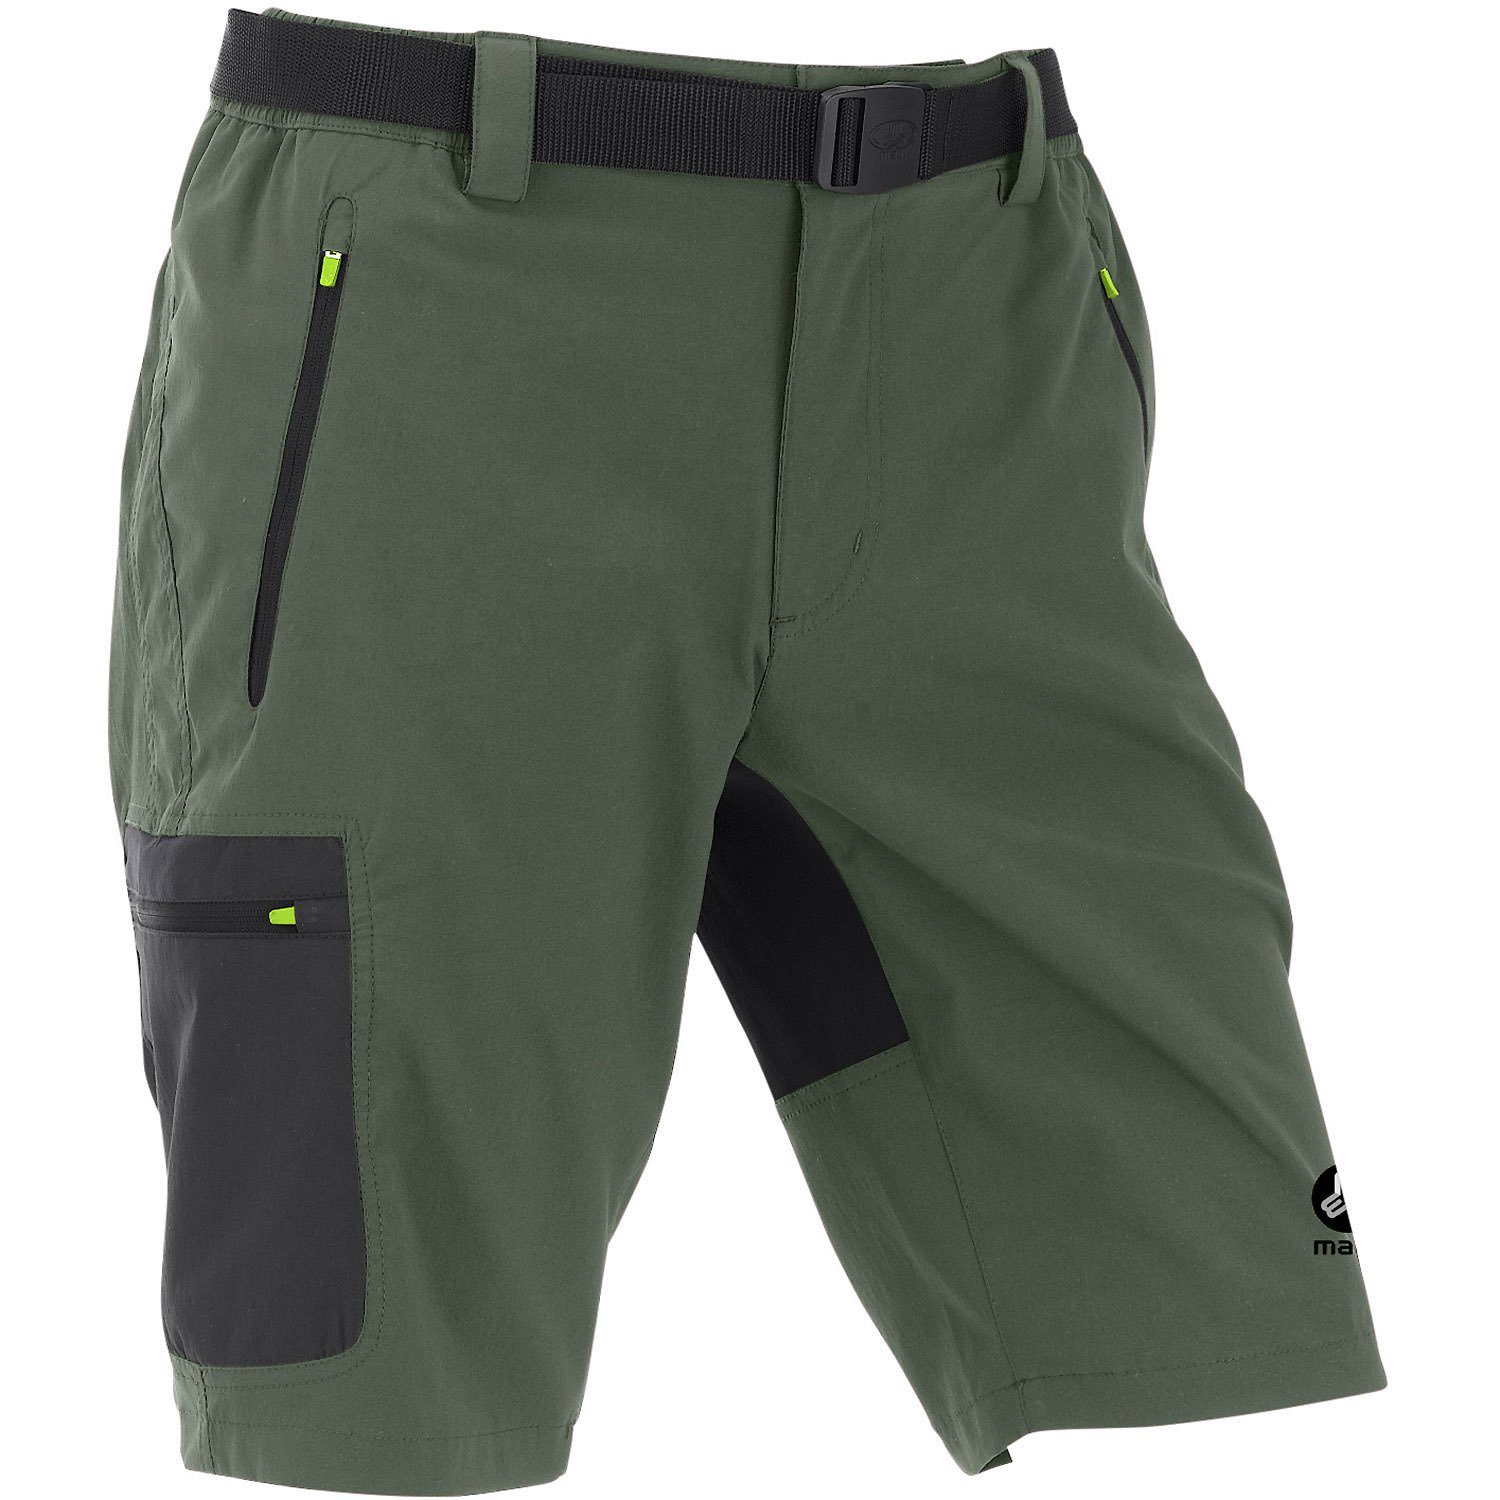 Maul Sport® Funktionsshorts Lorbeere Doldenhorn Shorts II elastic Bermuda